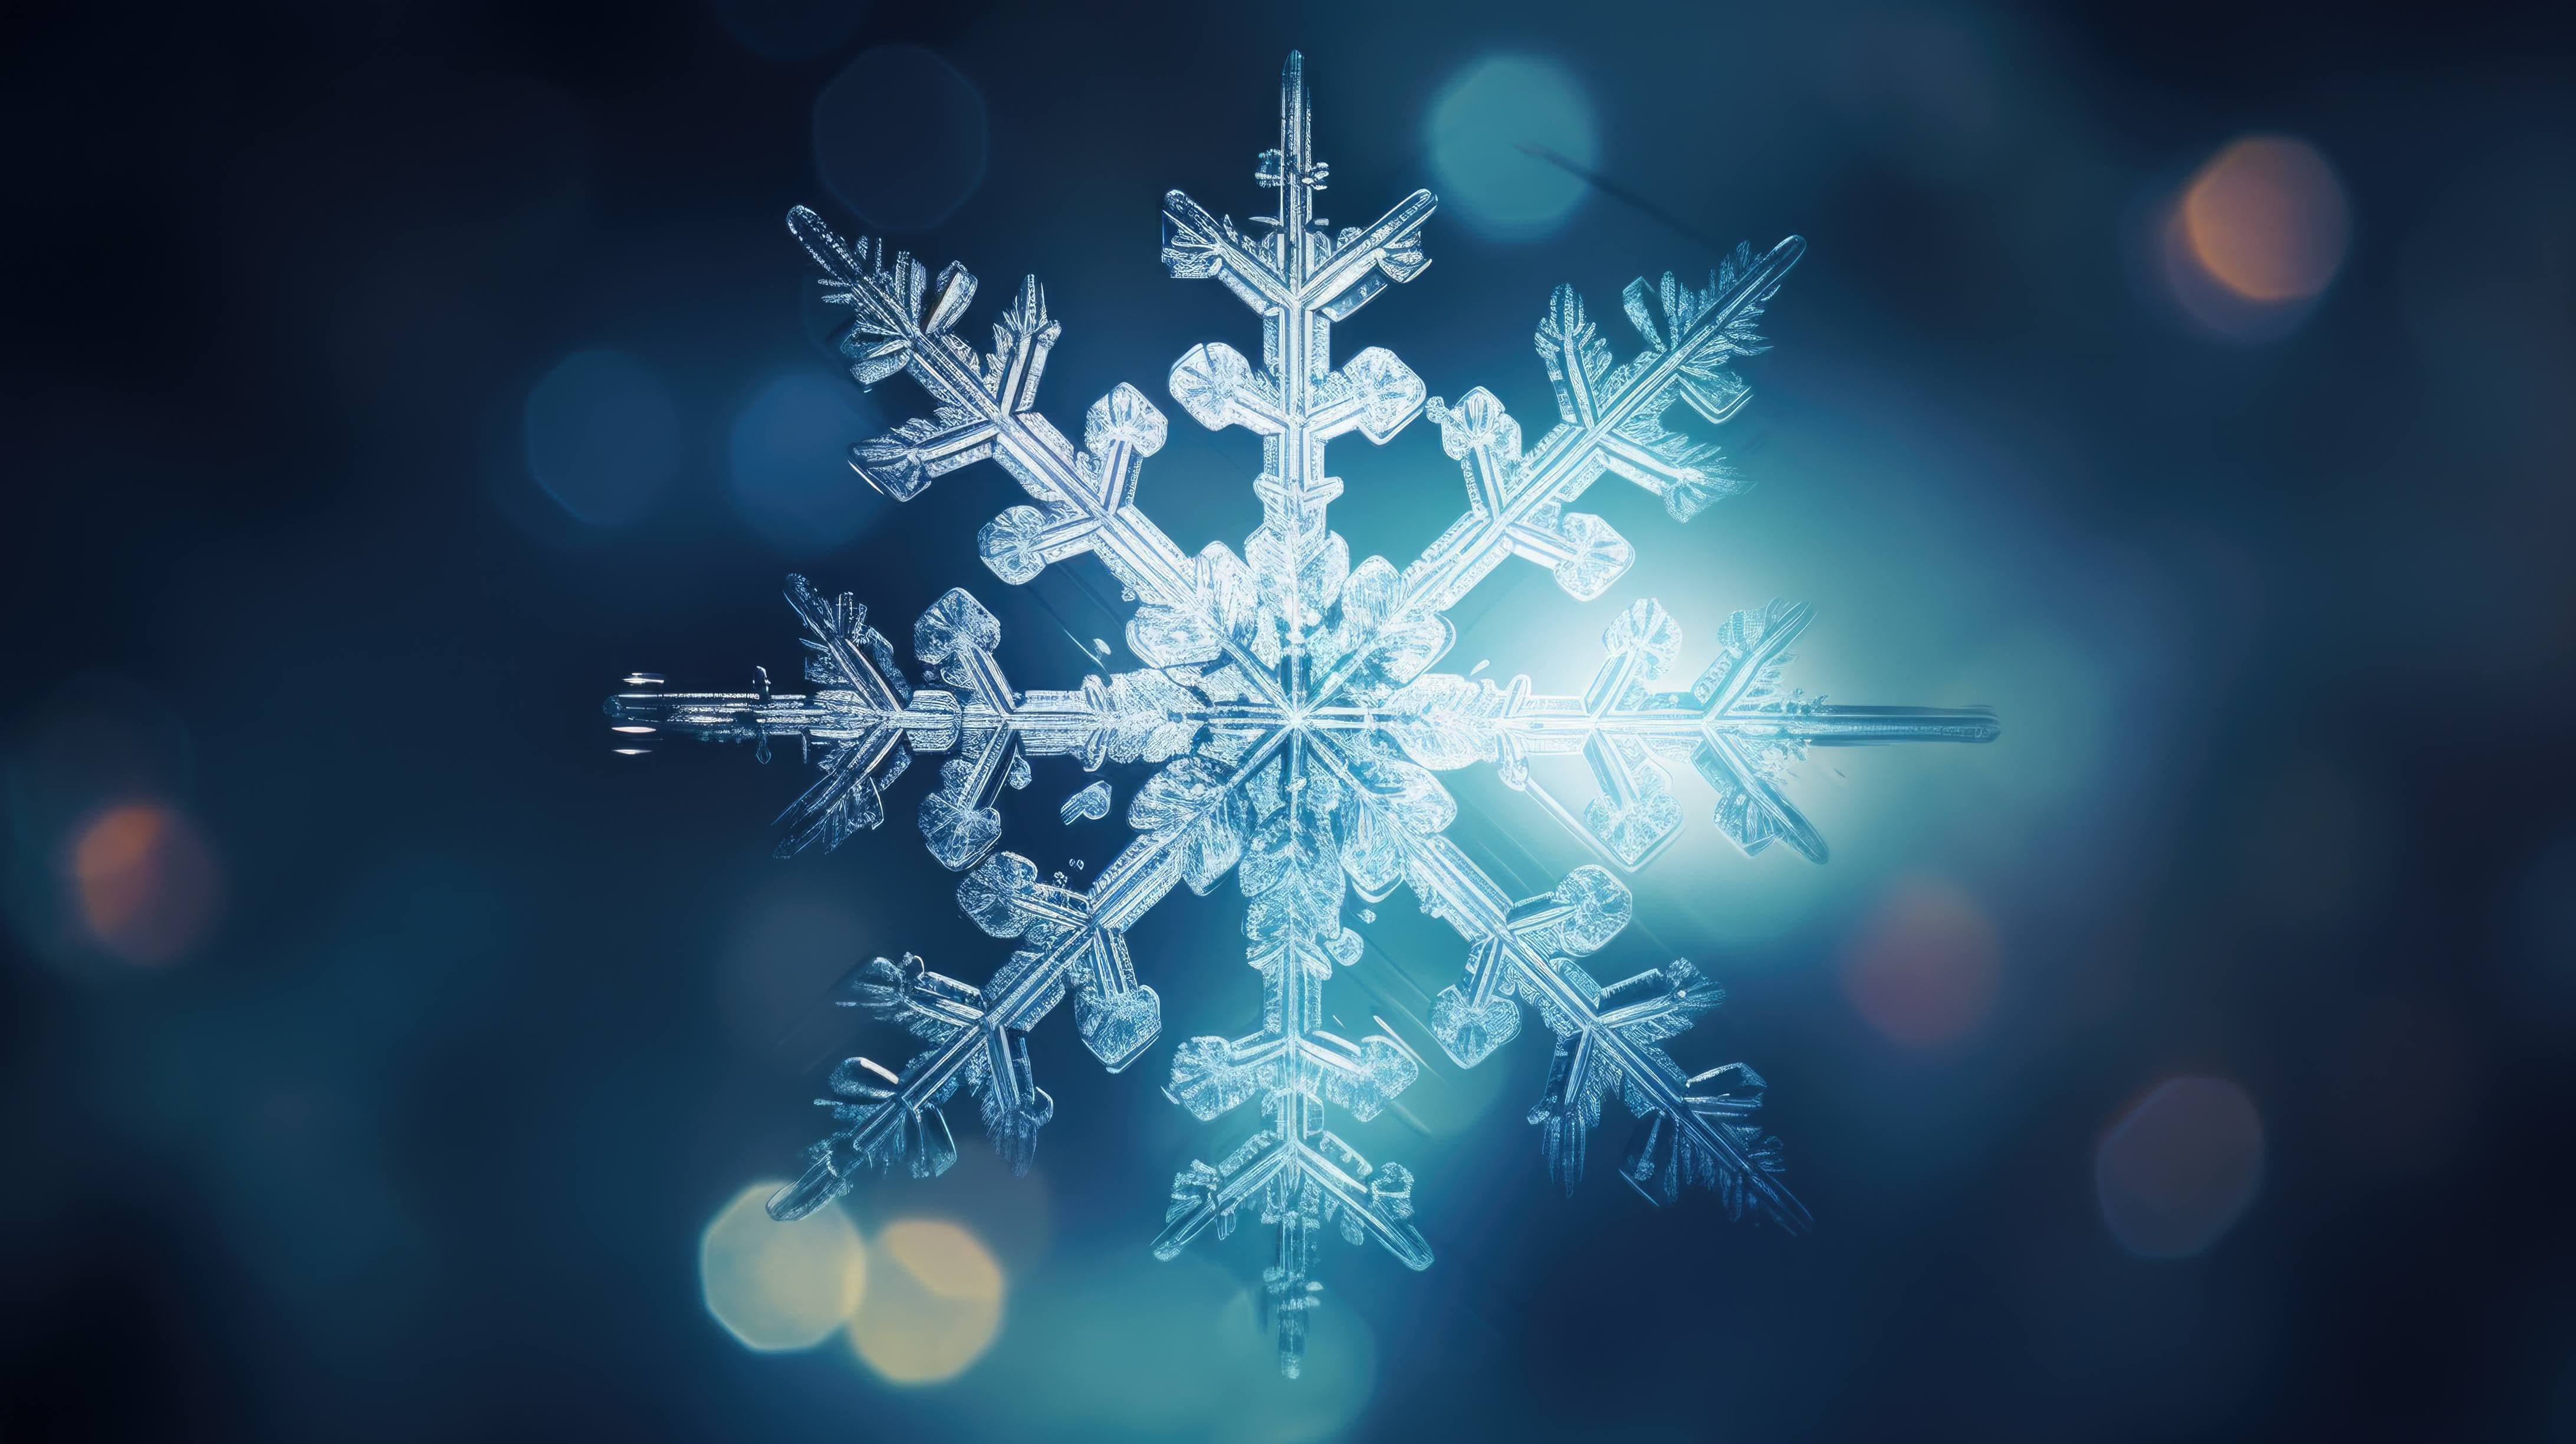 Free AI art image of snowflake pattern background